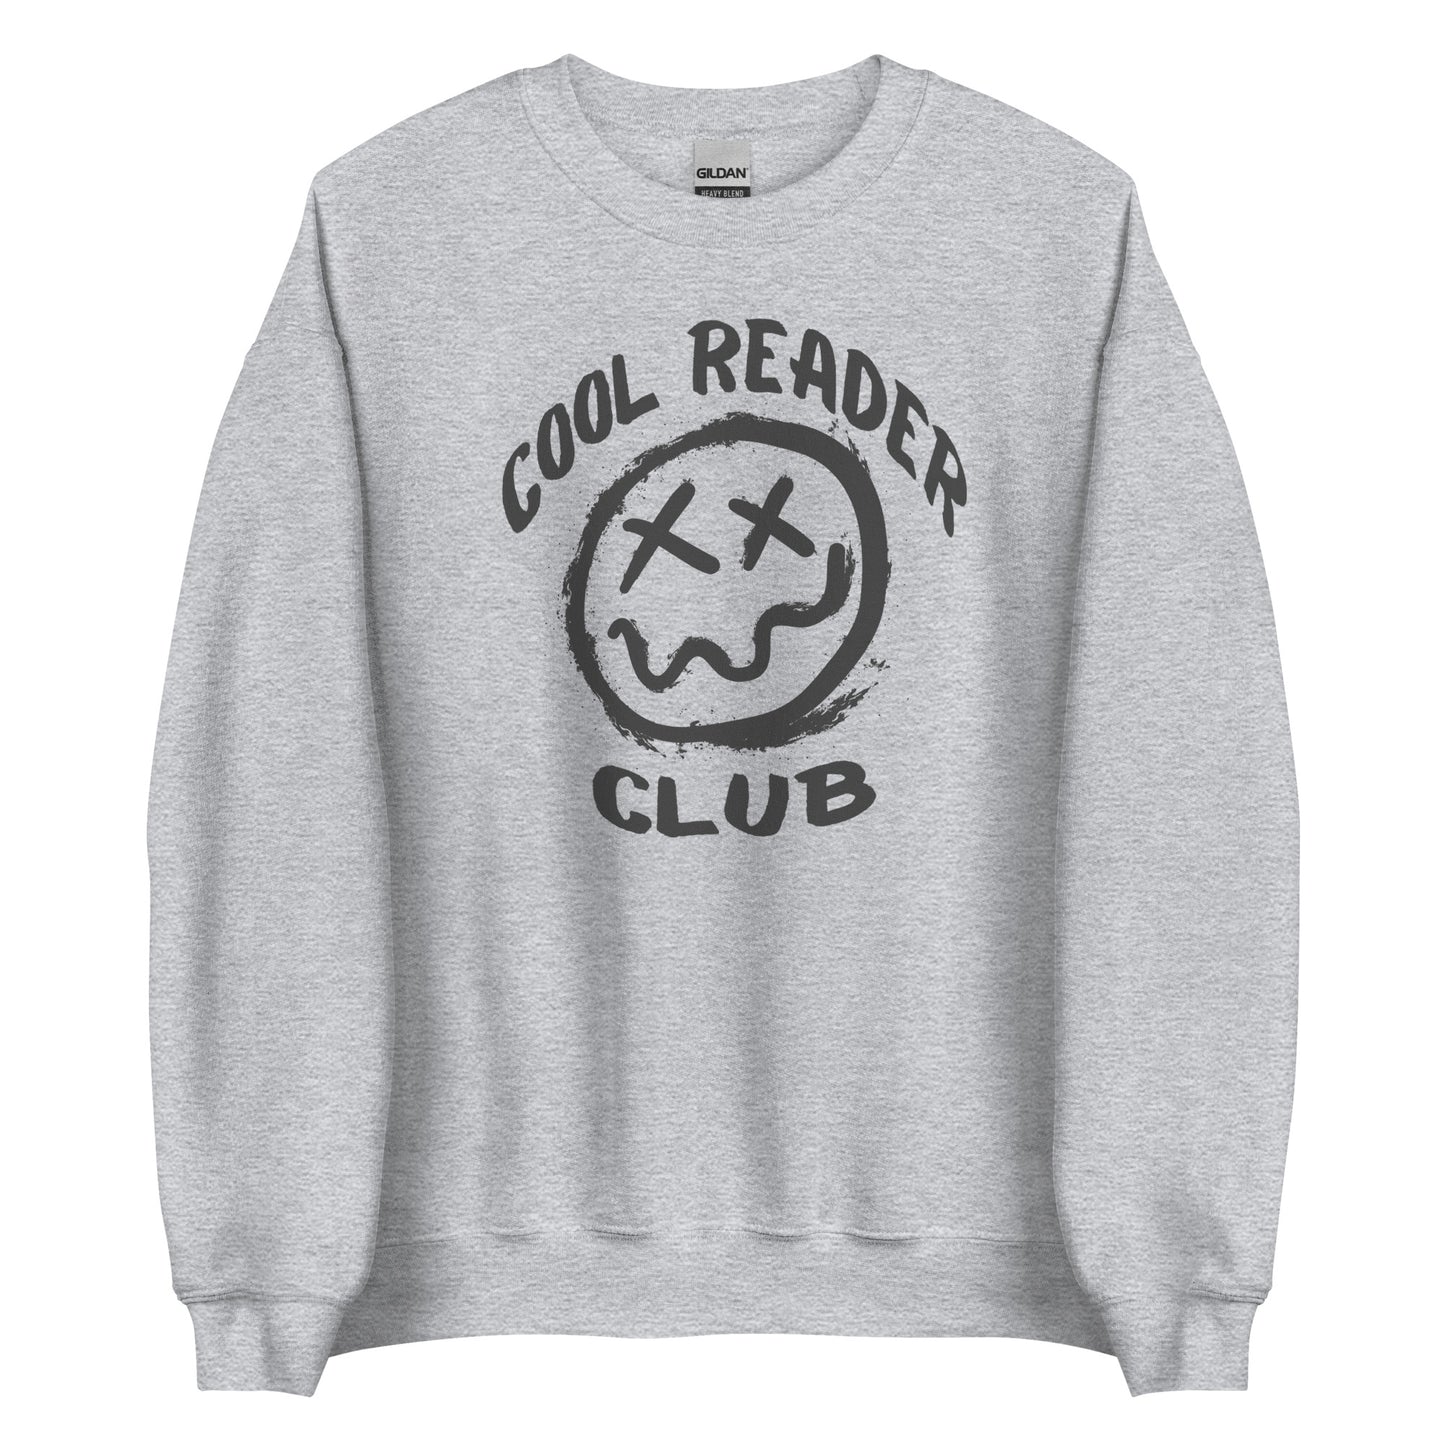 cool reader club sweatshirt